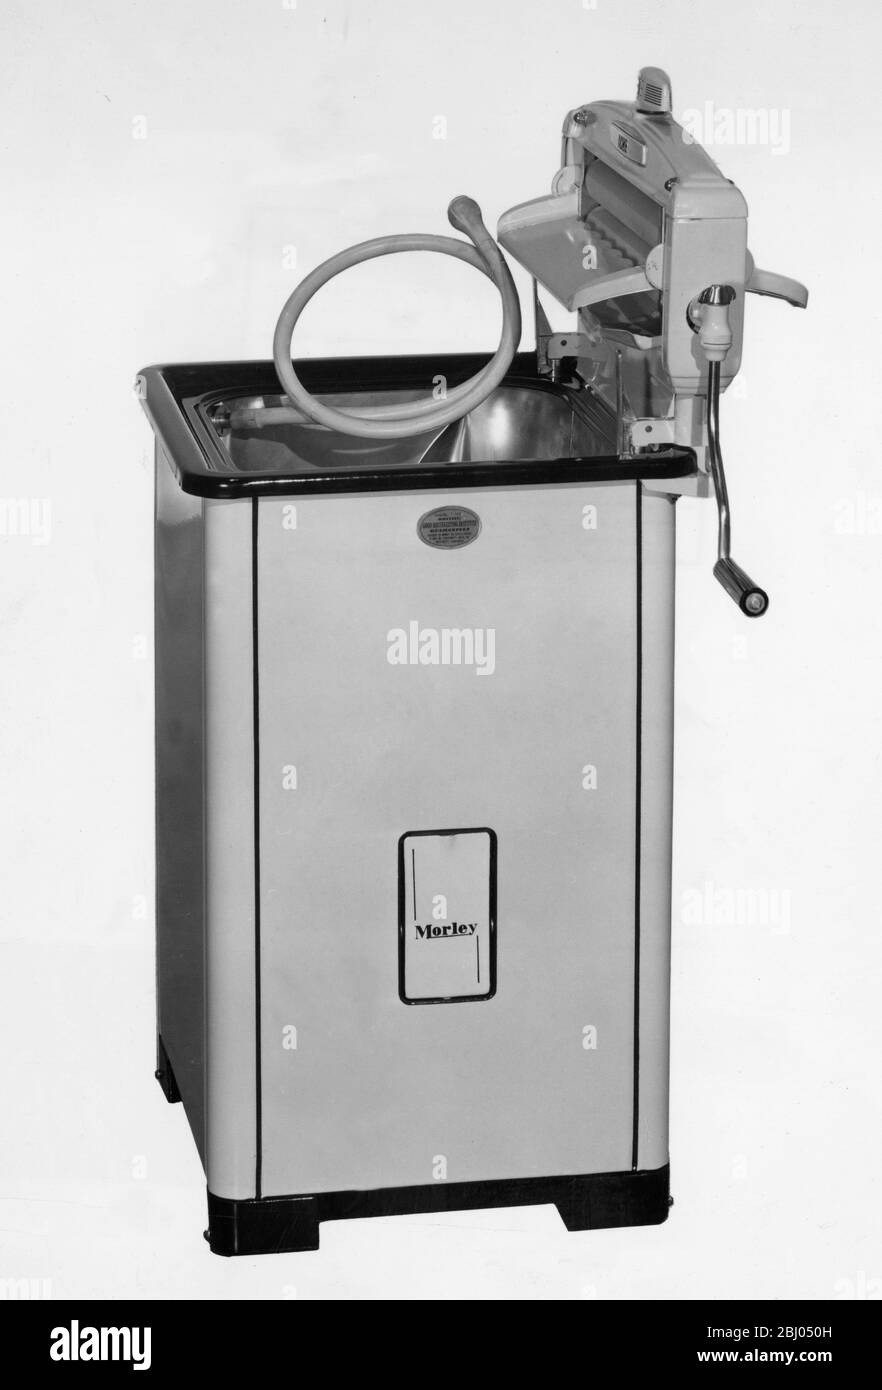 Lavadora de gas fotografías e imágenes de alta resolución - Alamy